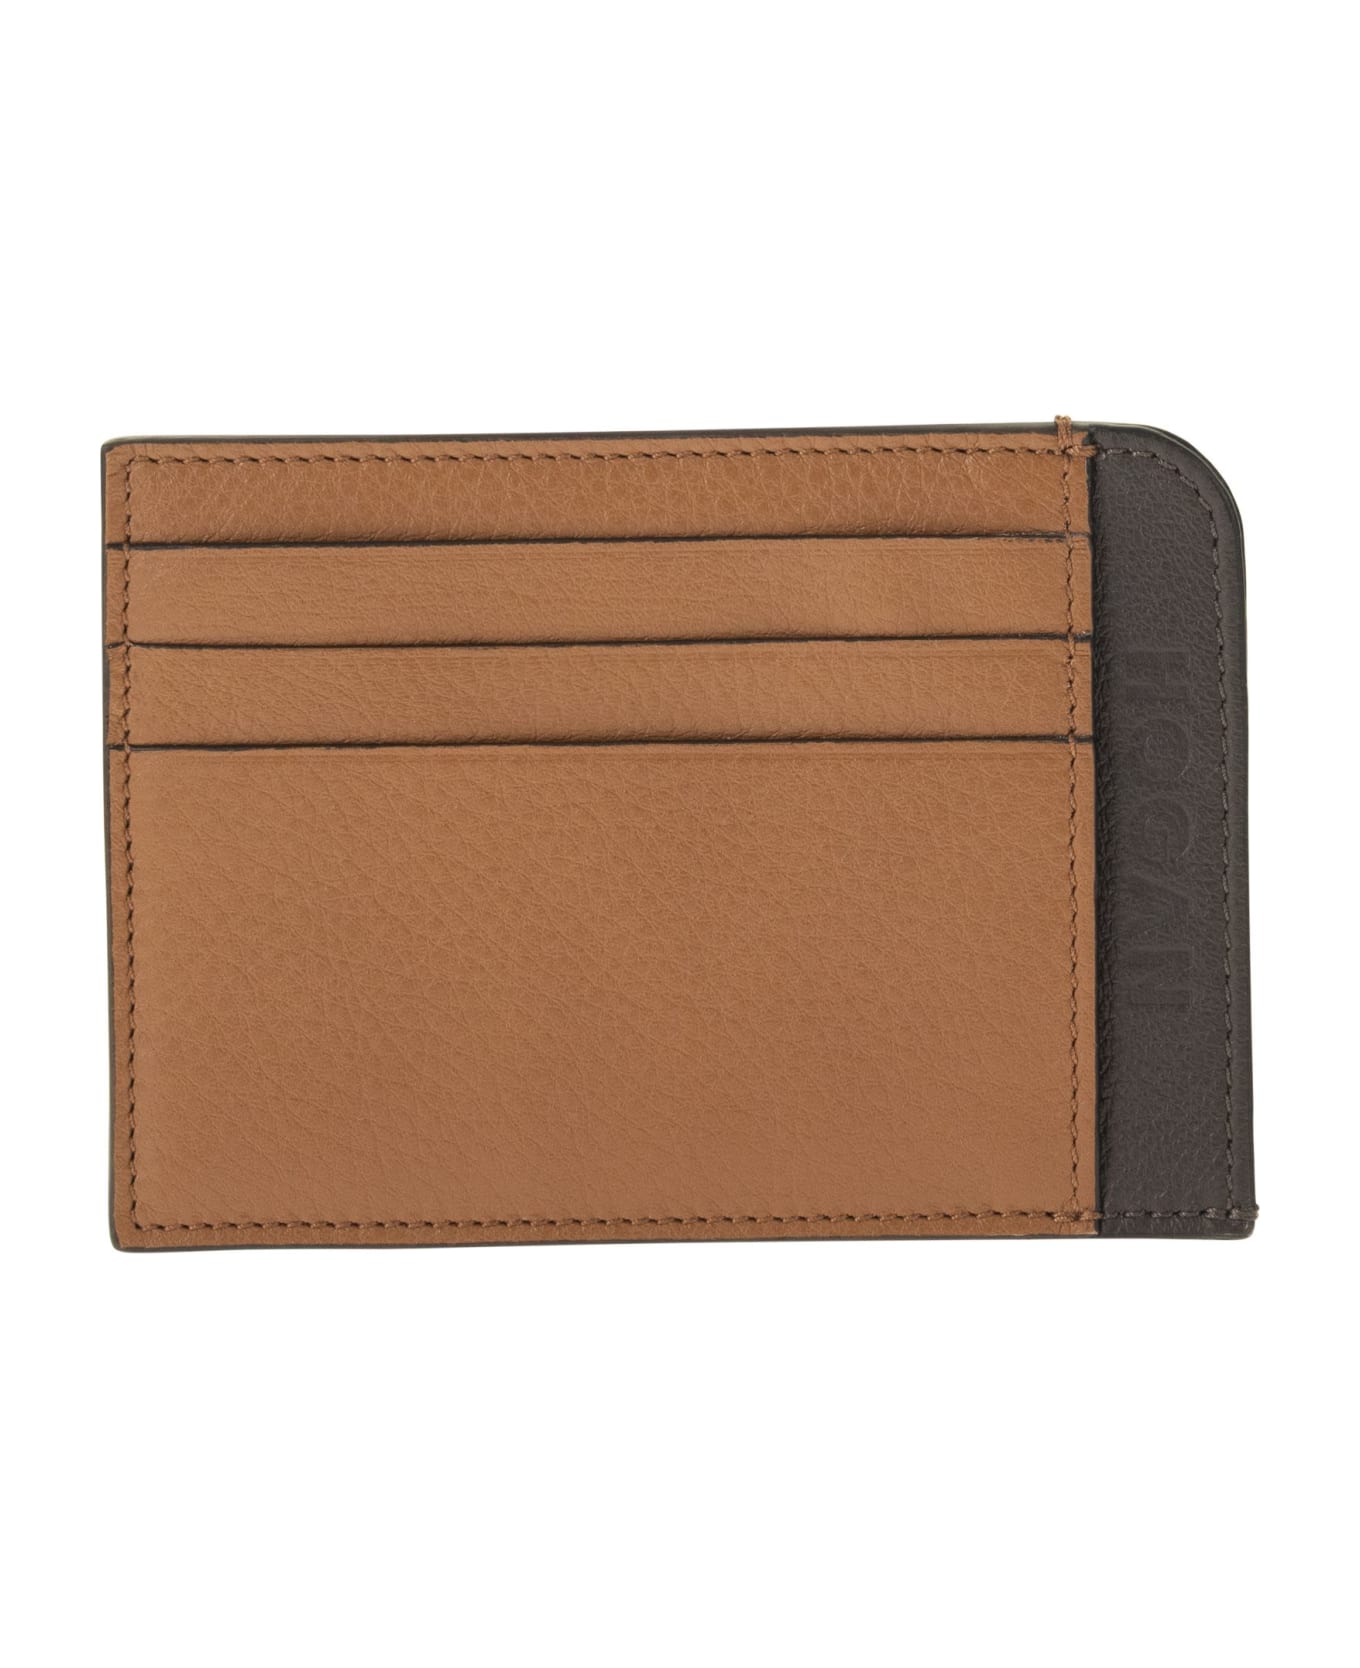 Hogan Leather Credit Card Case - (brandy chiaro)(ebano)